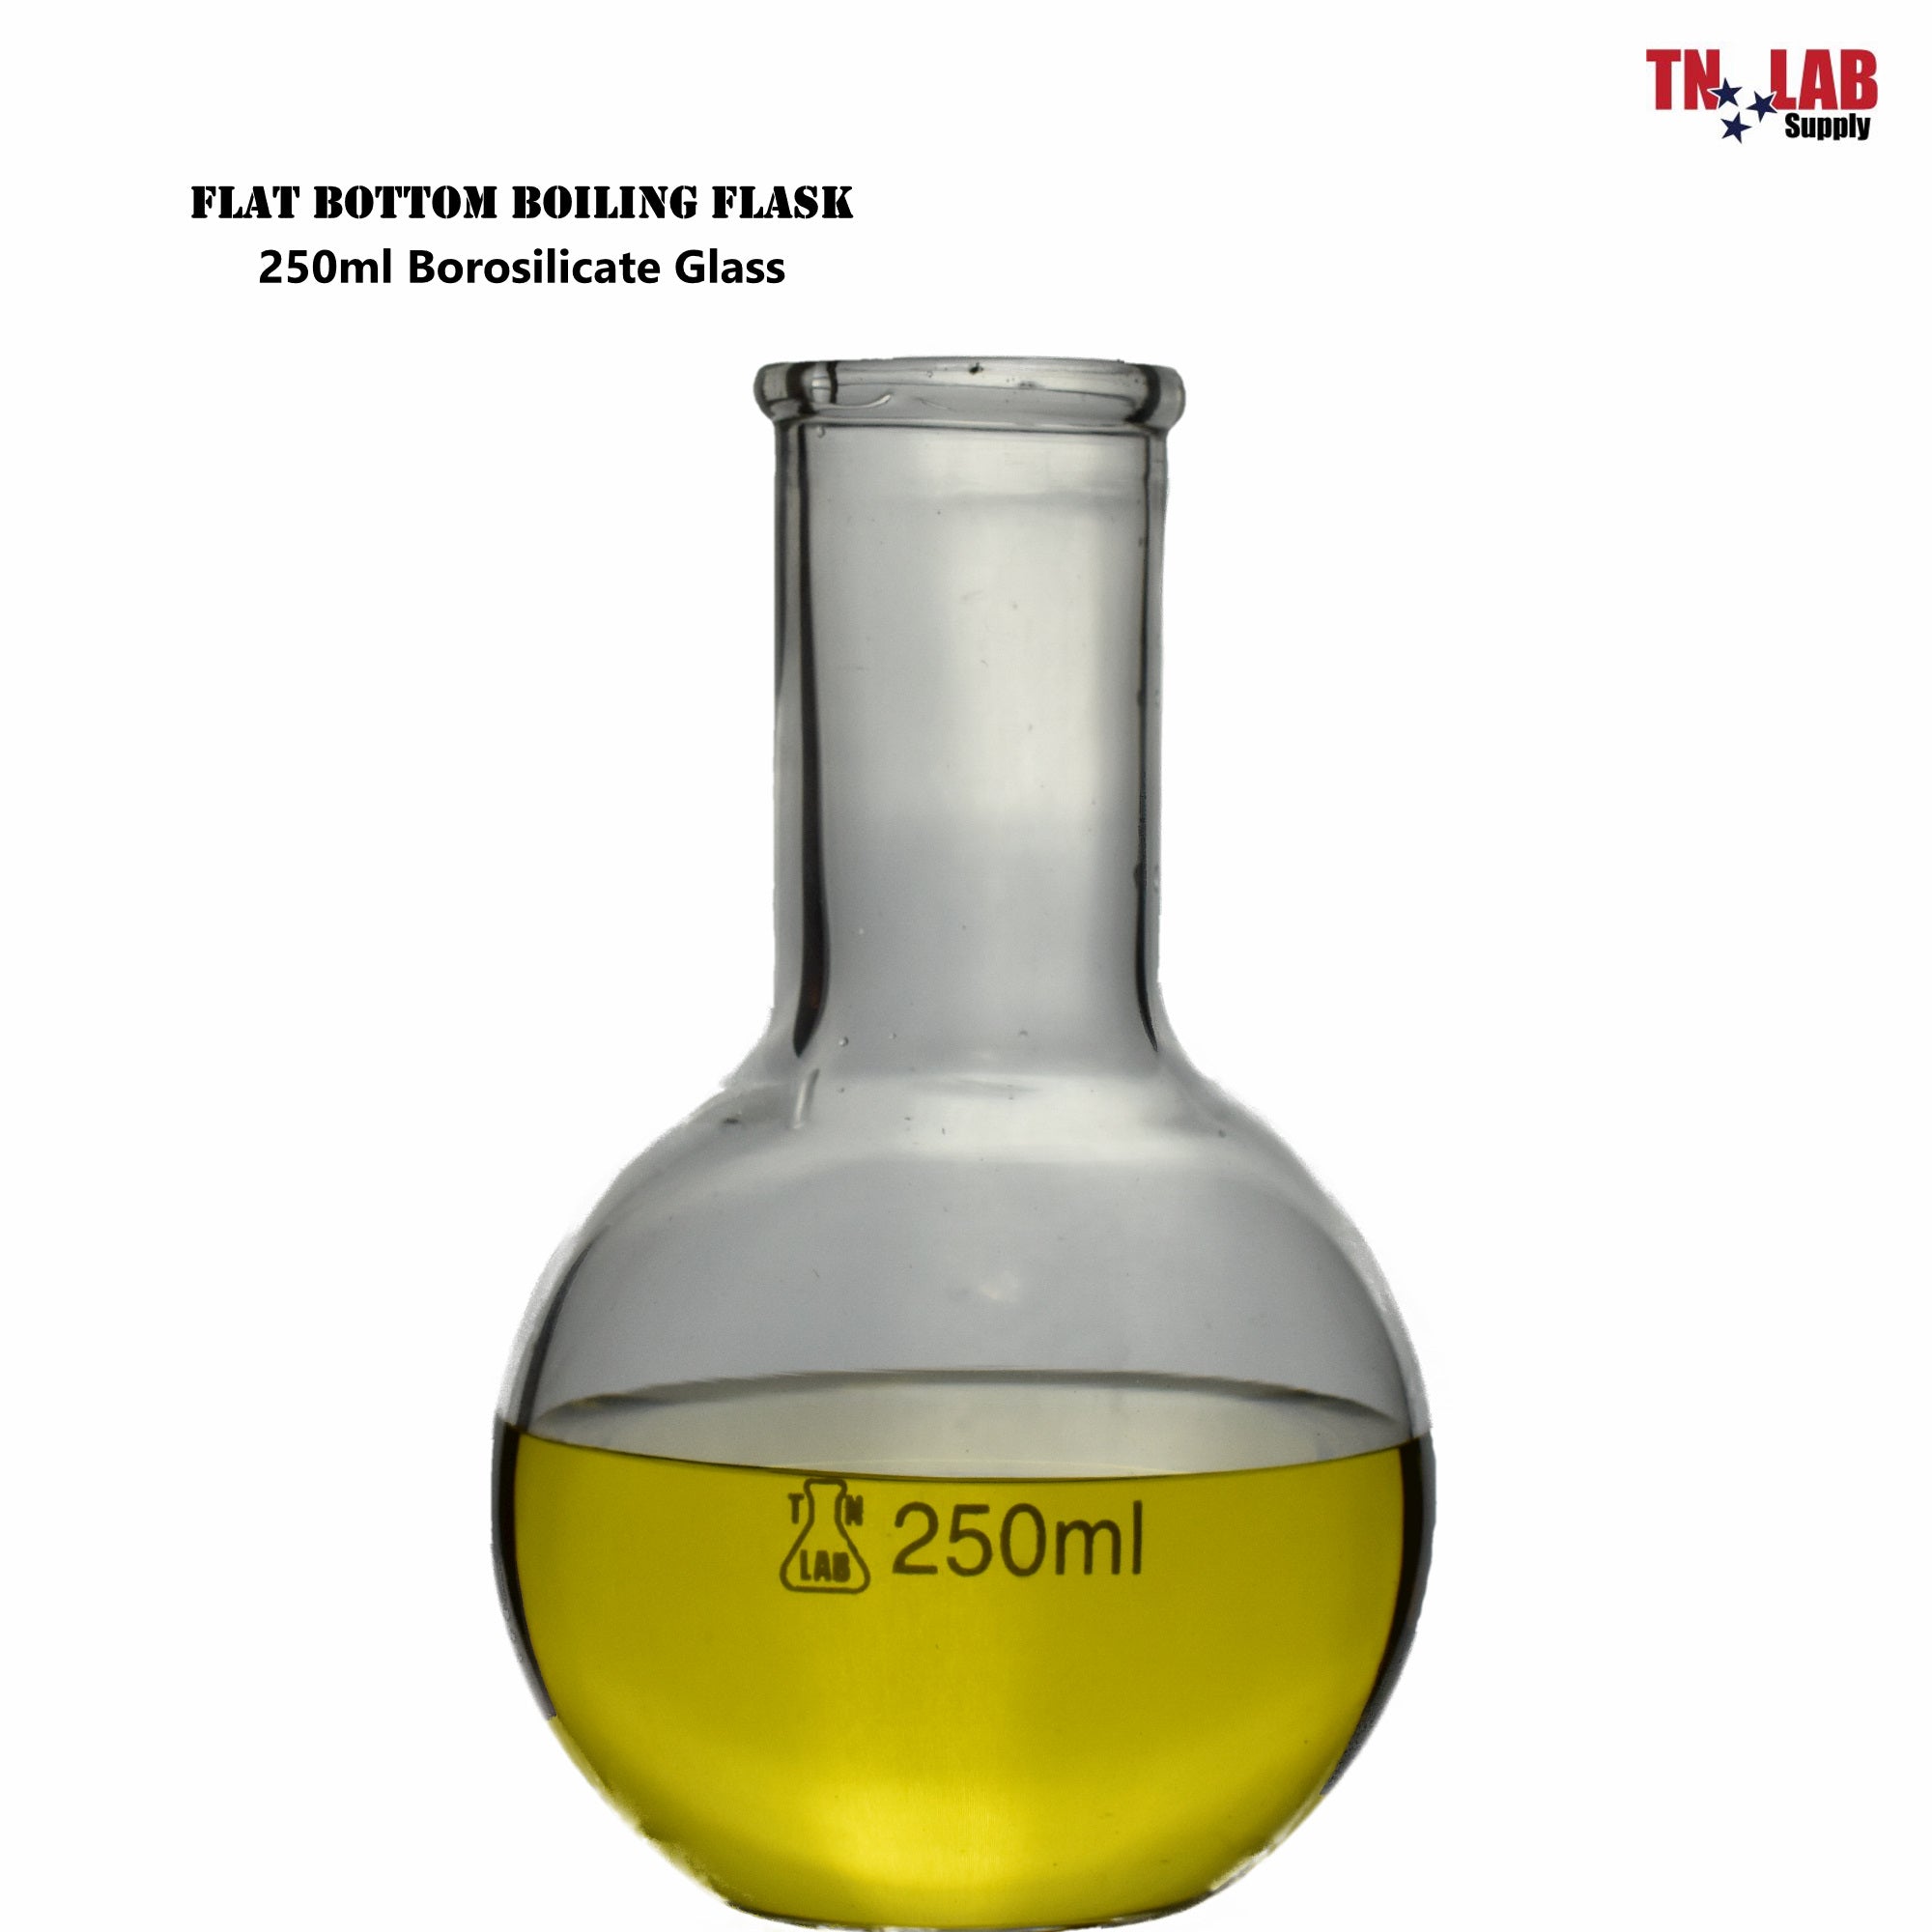 Flat Bottom Boiling Flask Florence Flask Borosilicate Glass 250ml 6-Pack